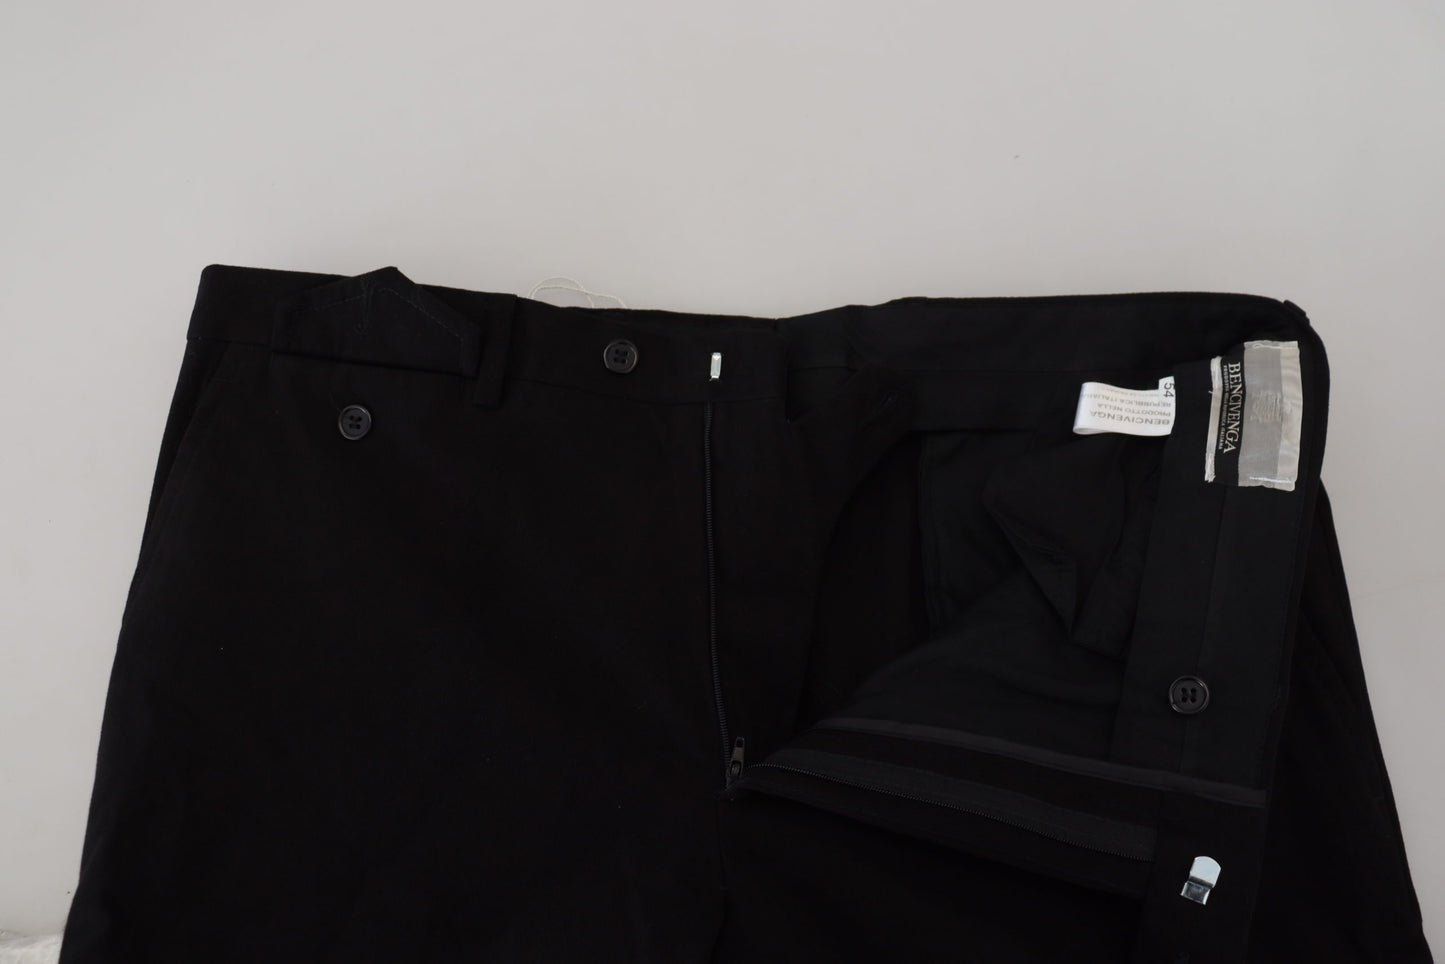 Elegant Black Cotton Trousers for Men